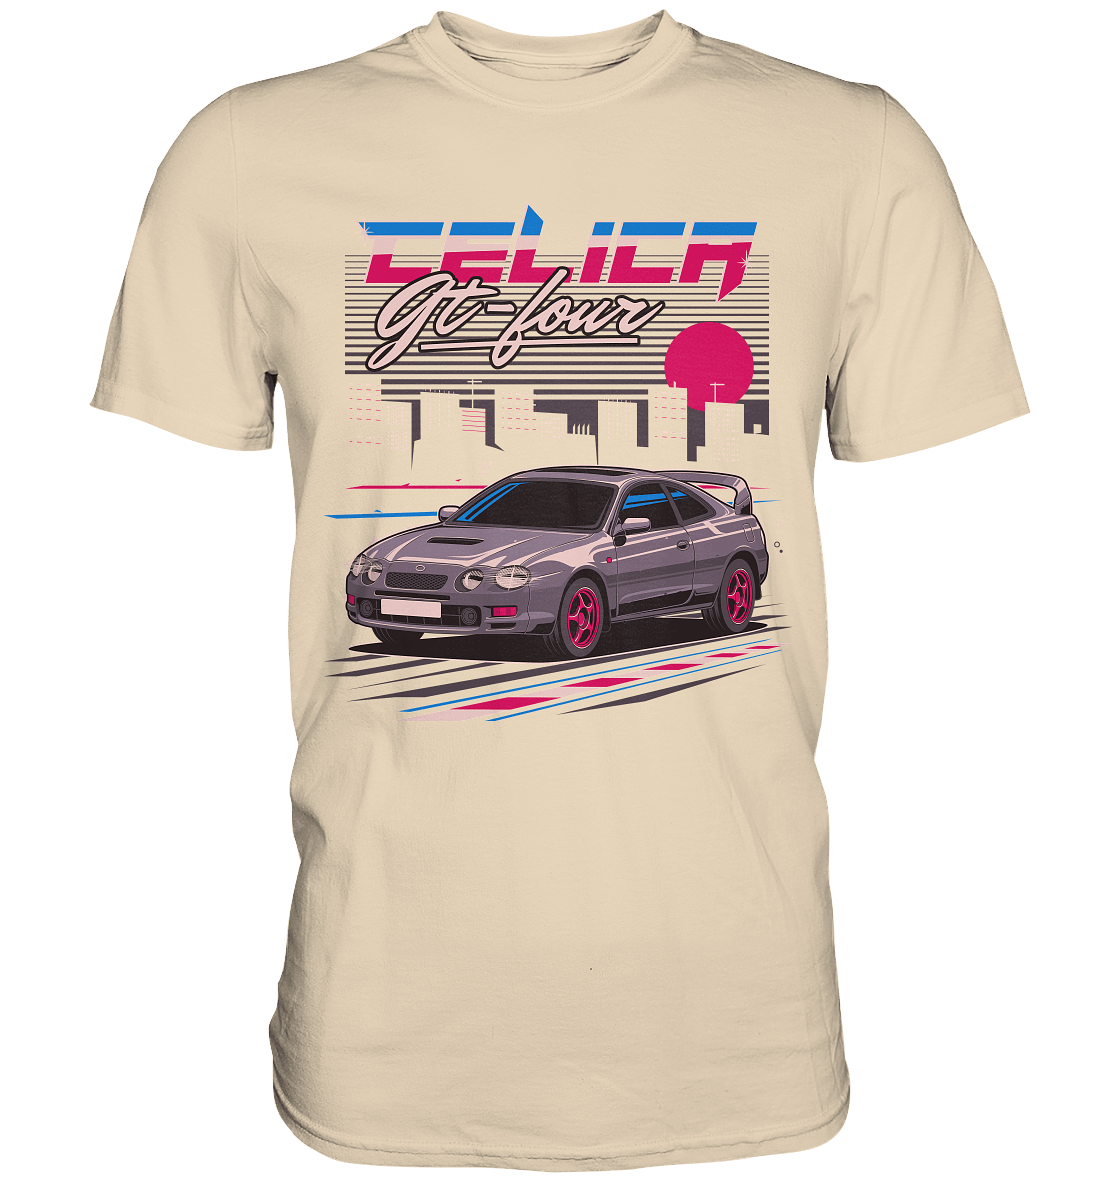 Celica GT4 - Premium Shirt - MotoMerch.de